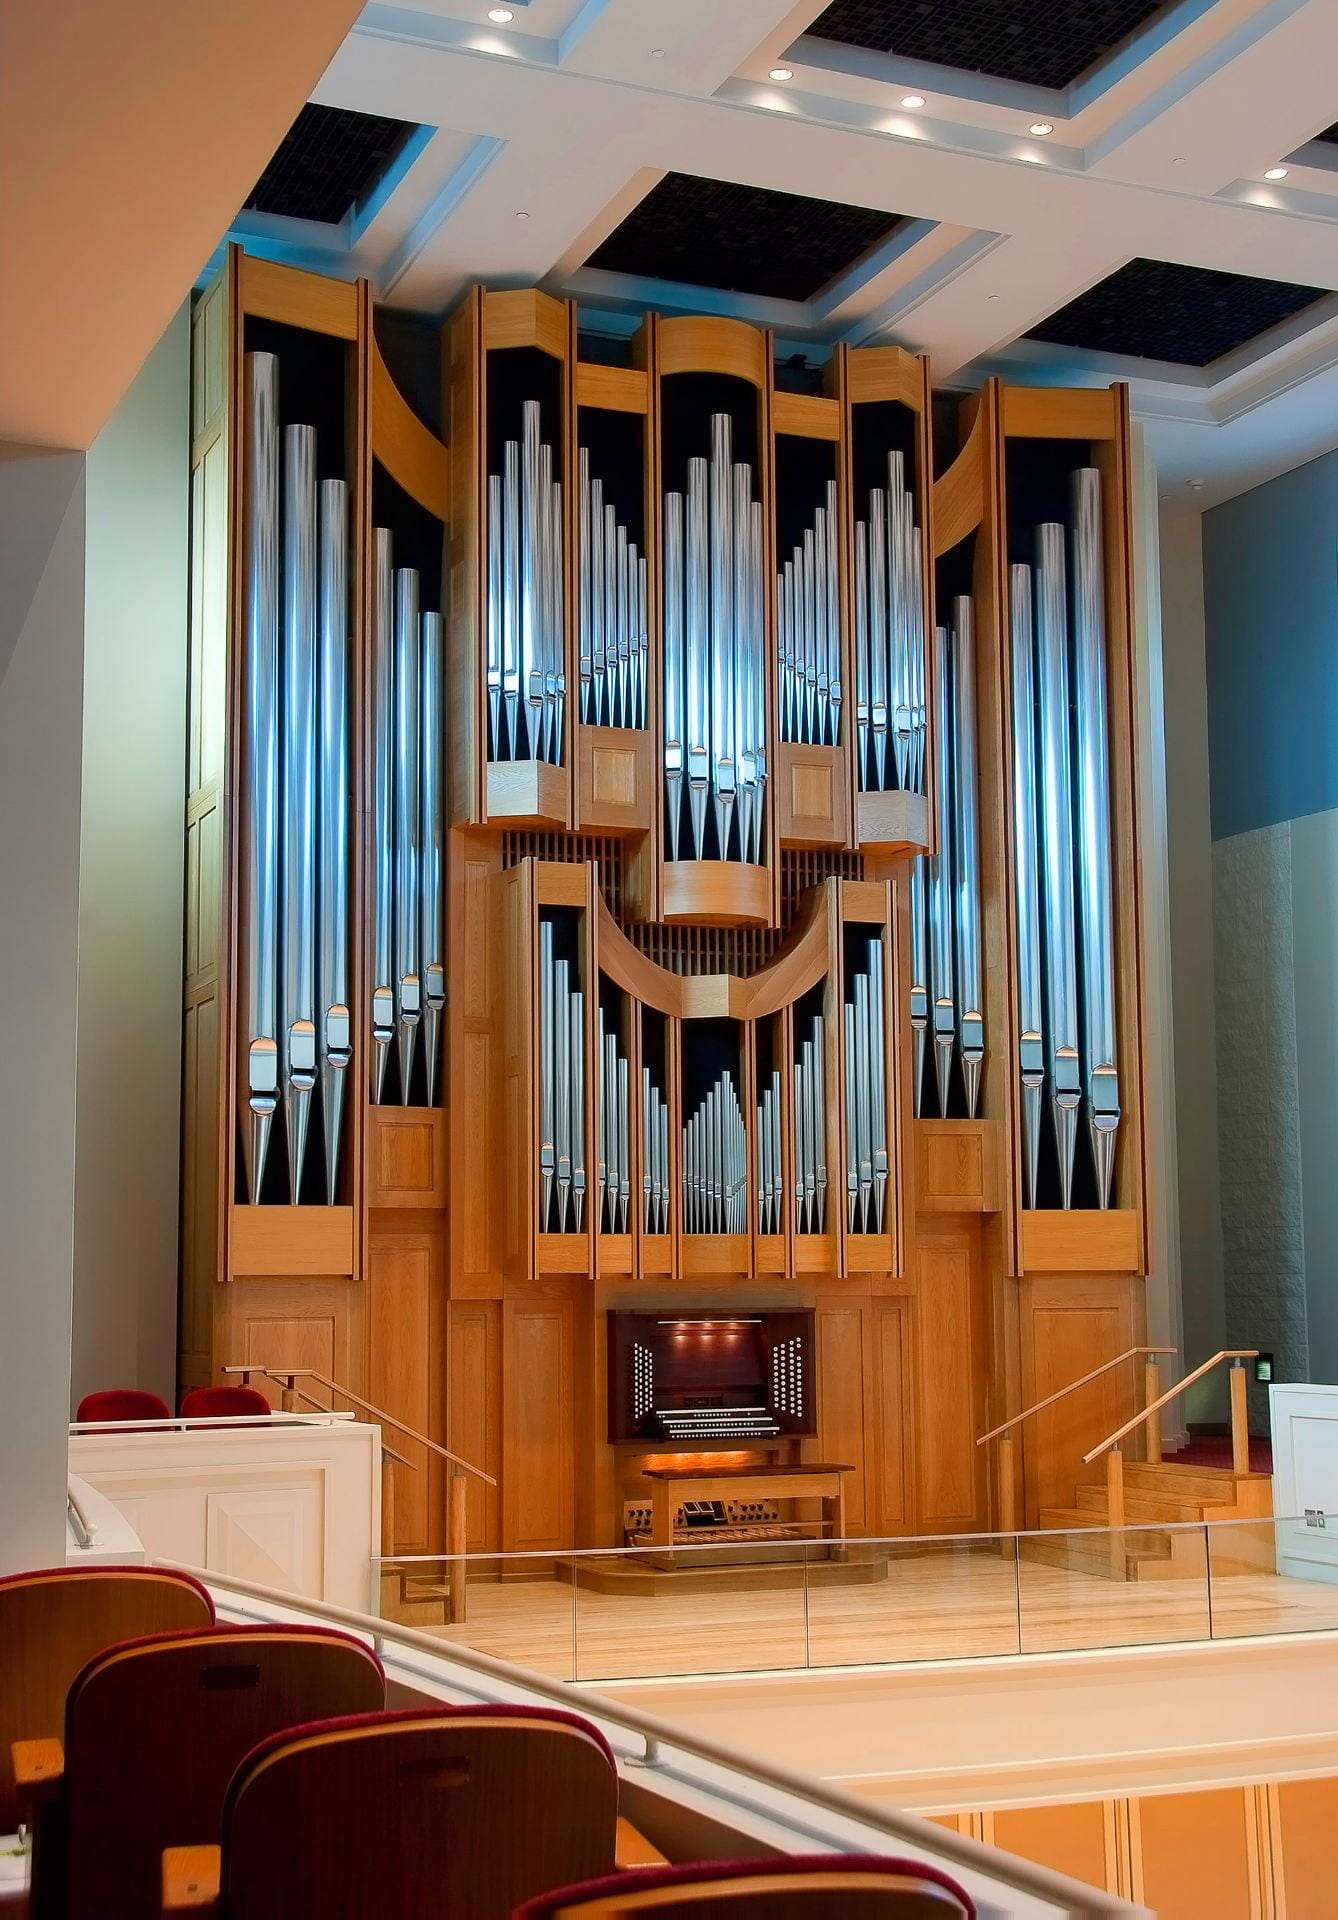 Auer Hall organ